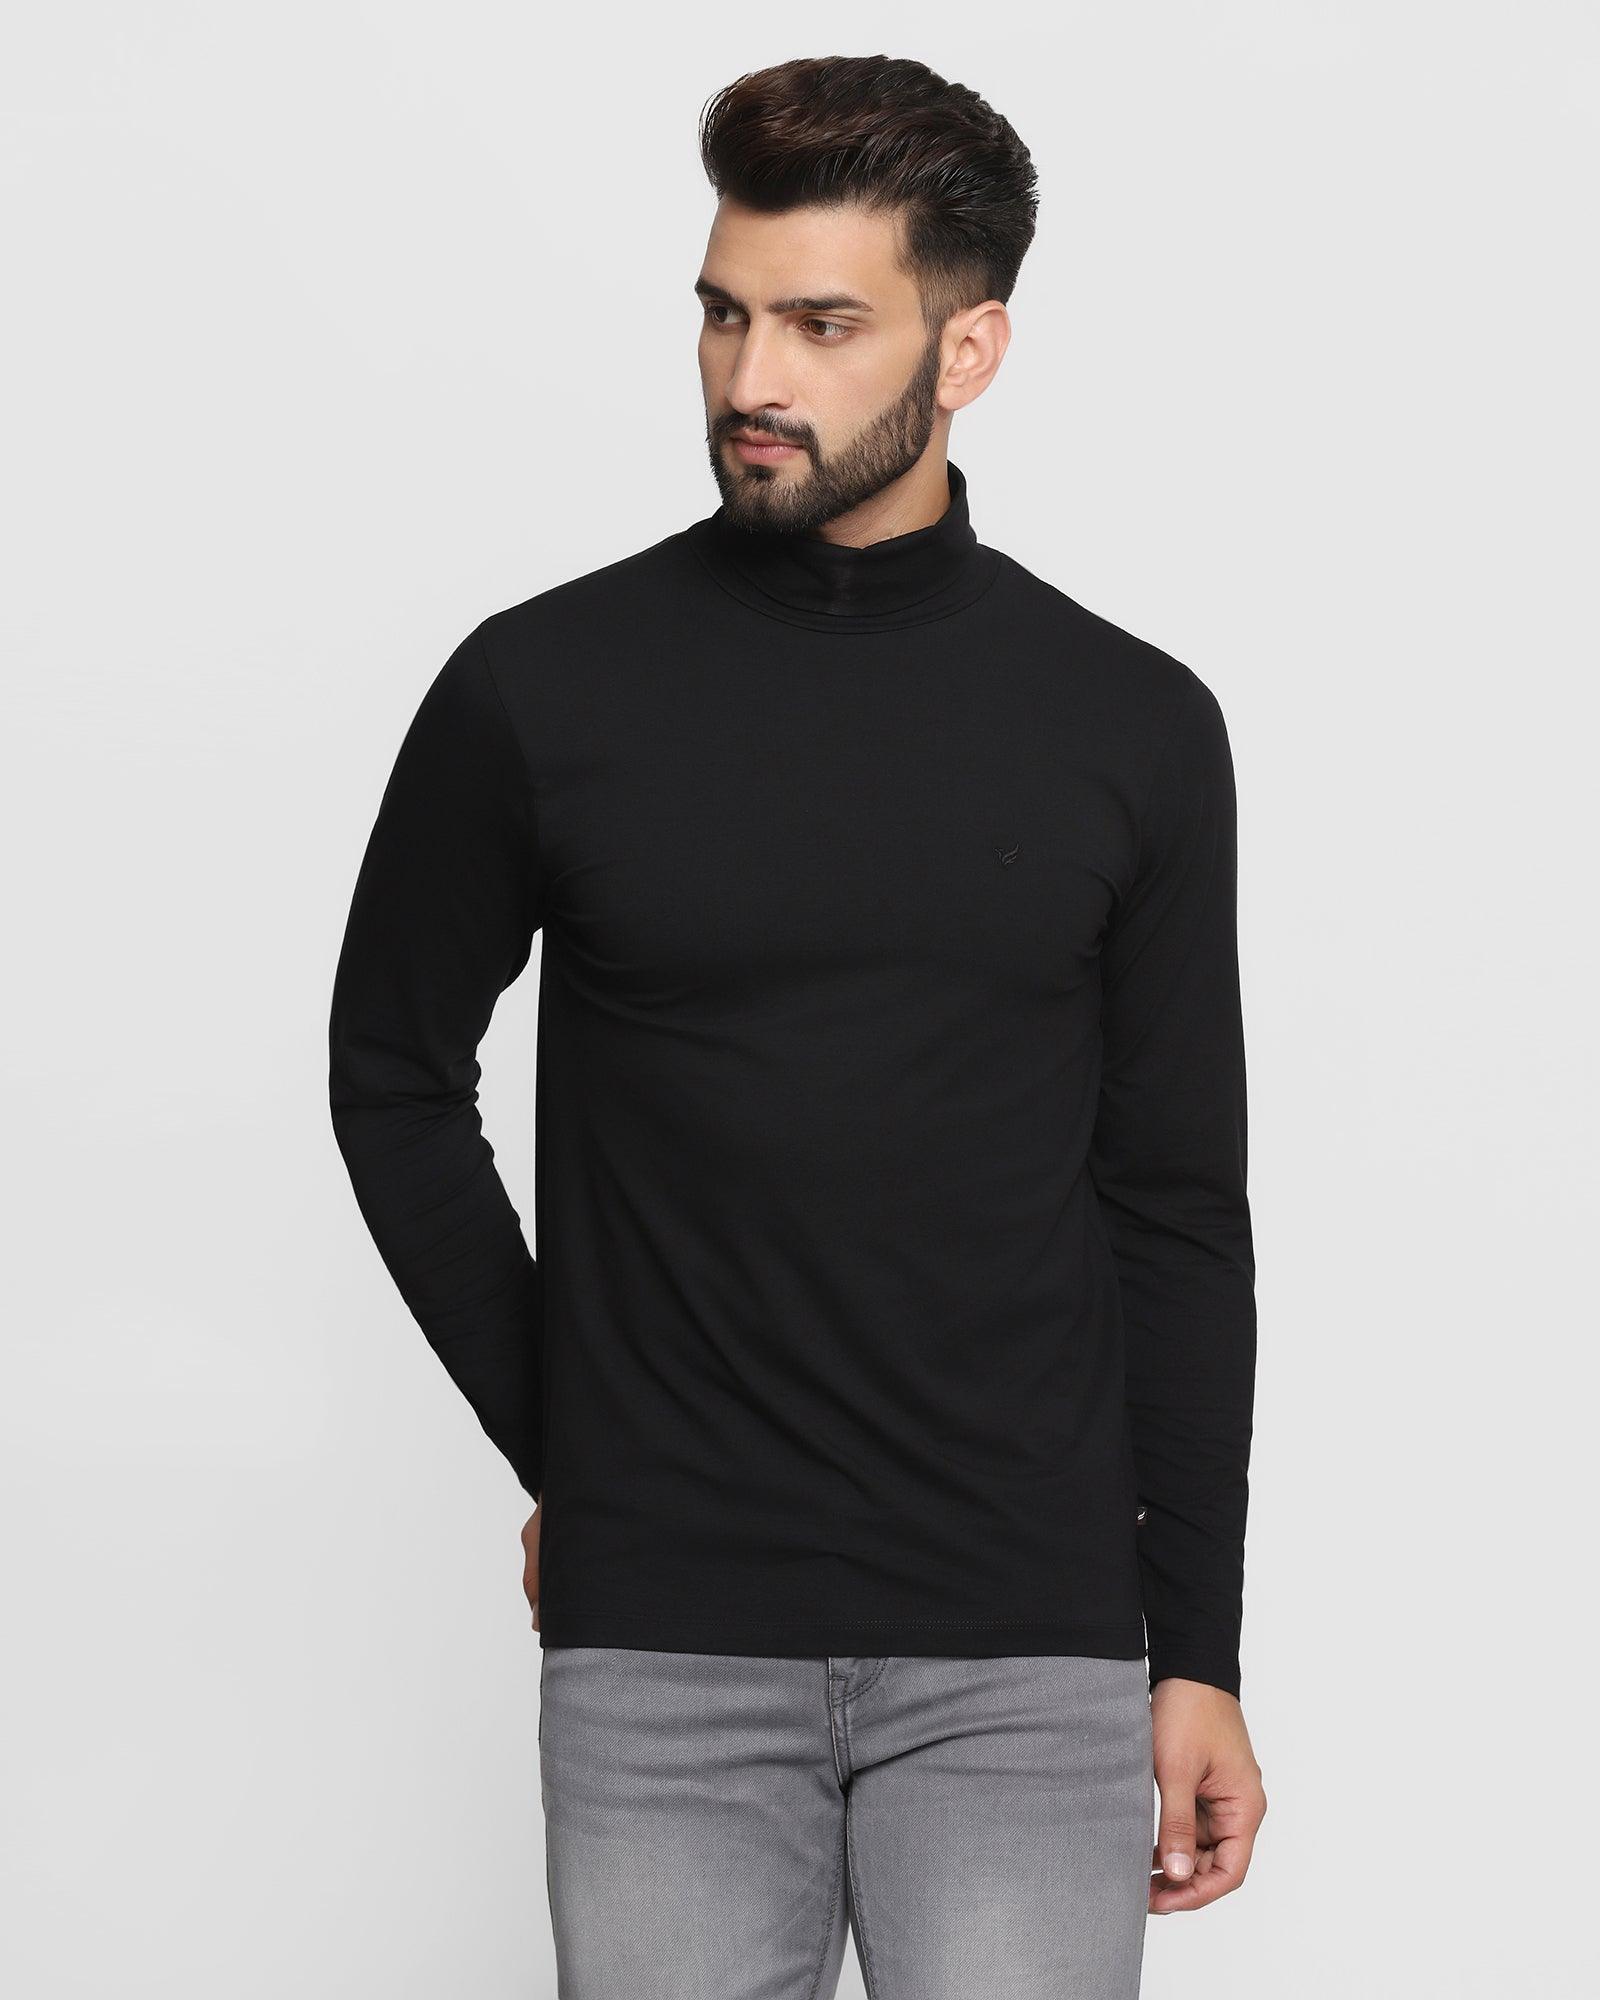 Stylized Collar Black Solid T Shirt - Jimmy